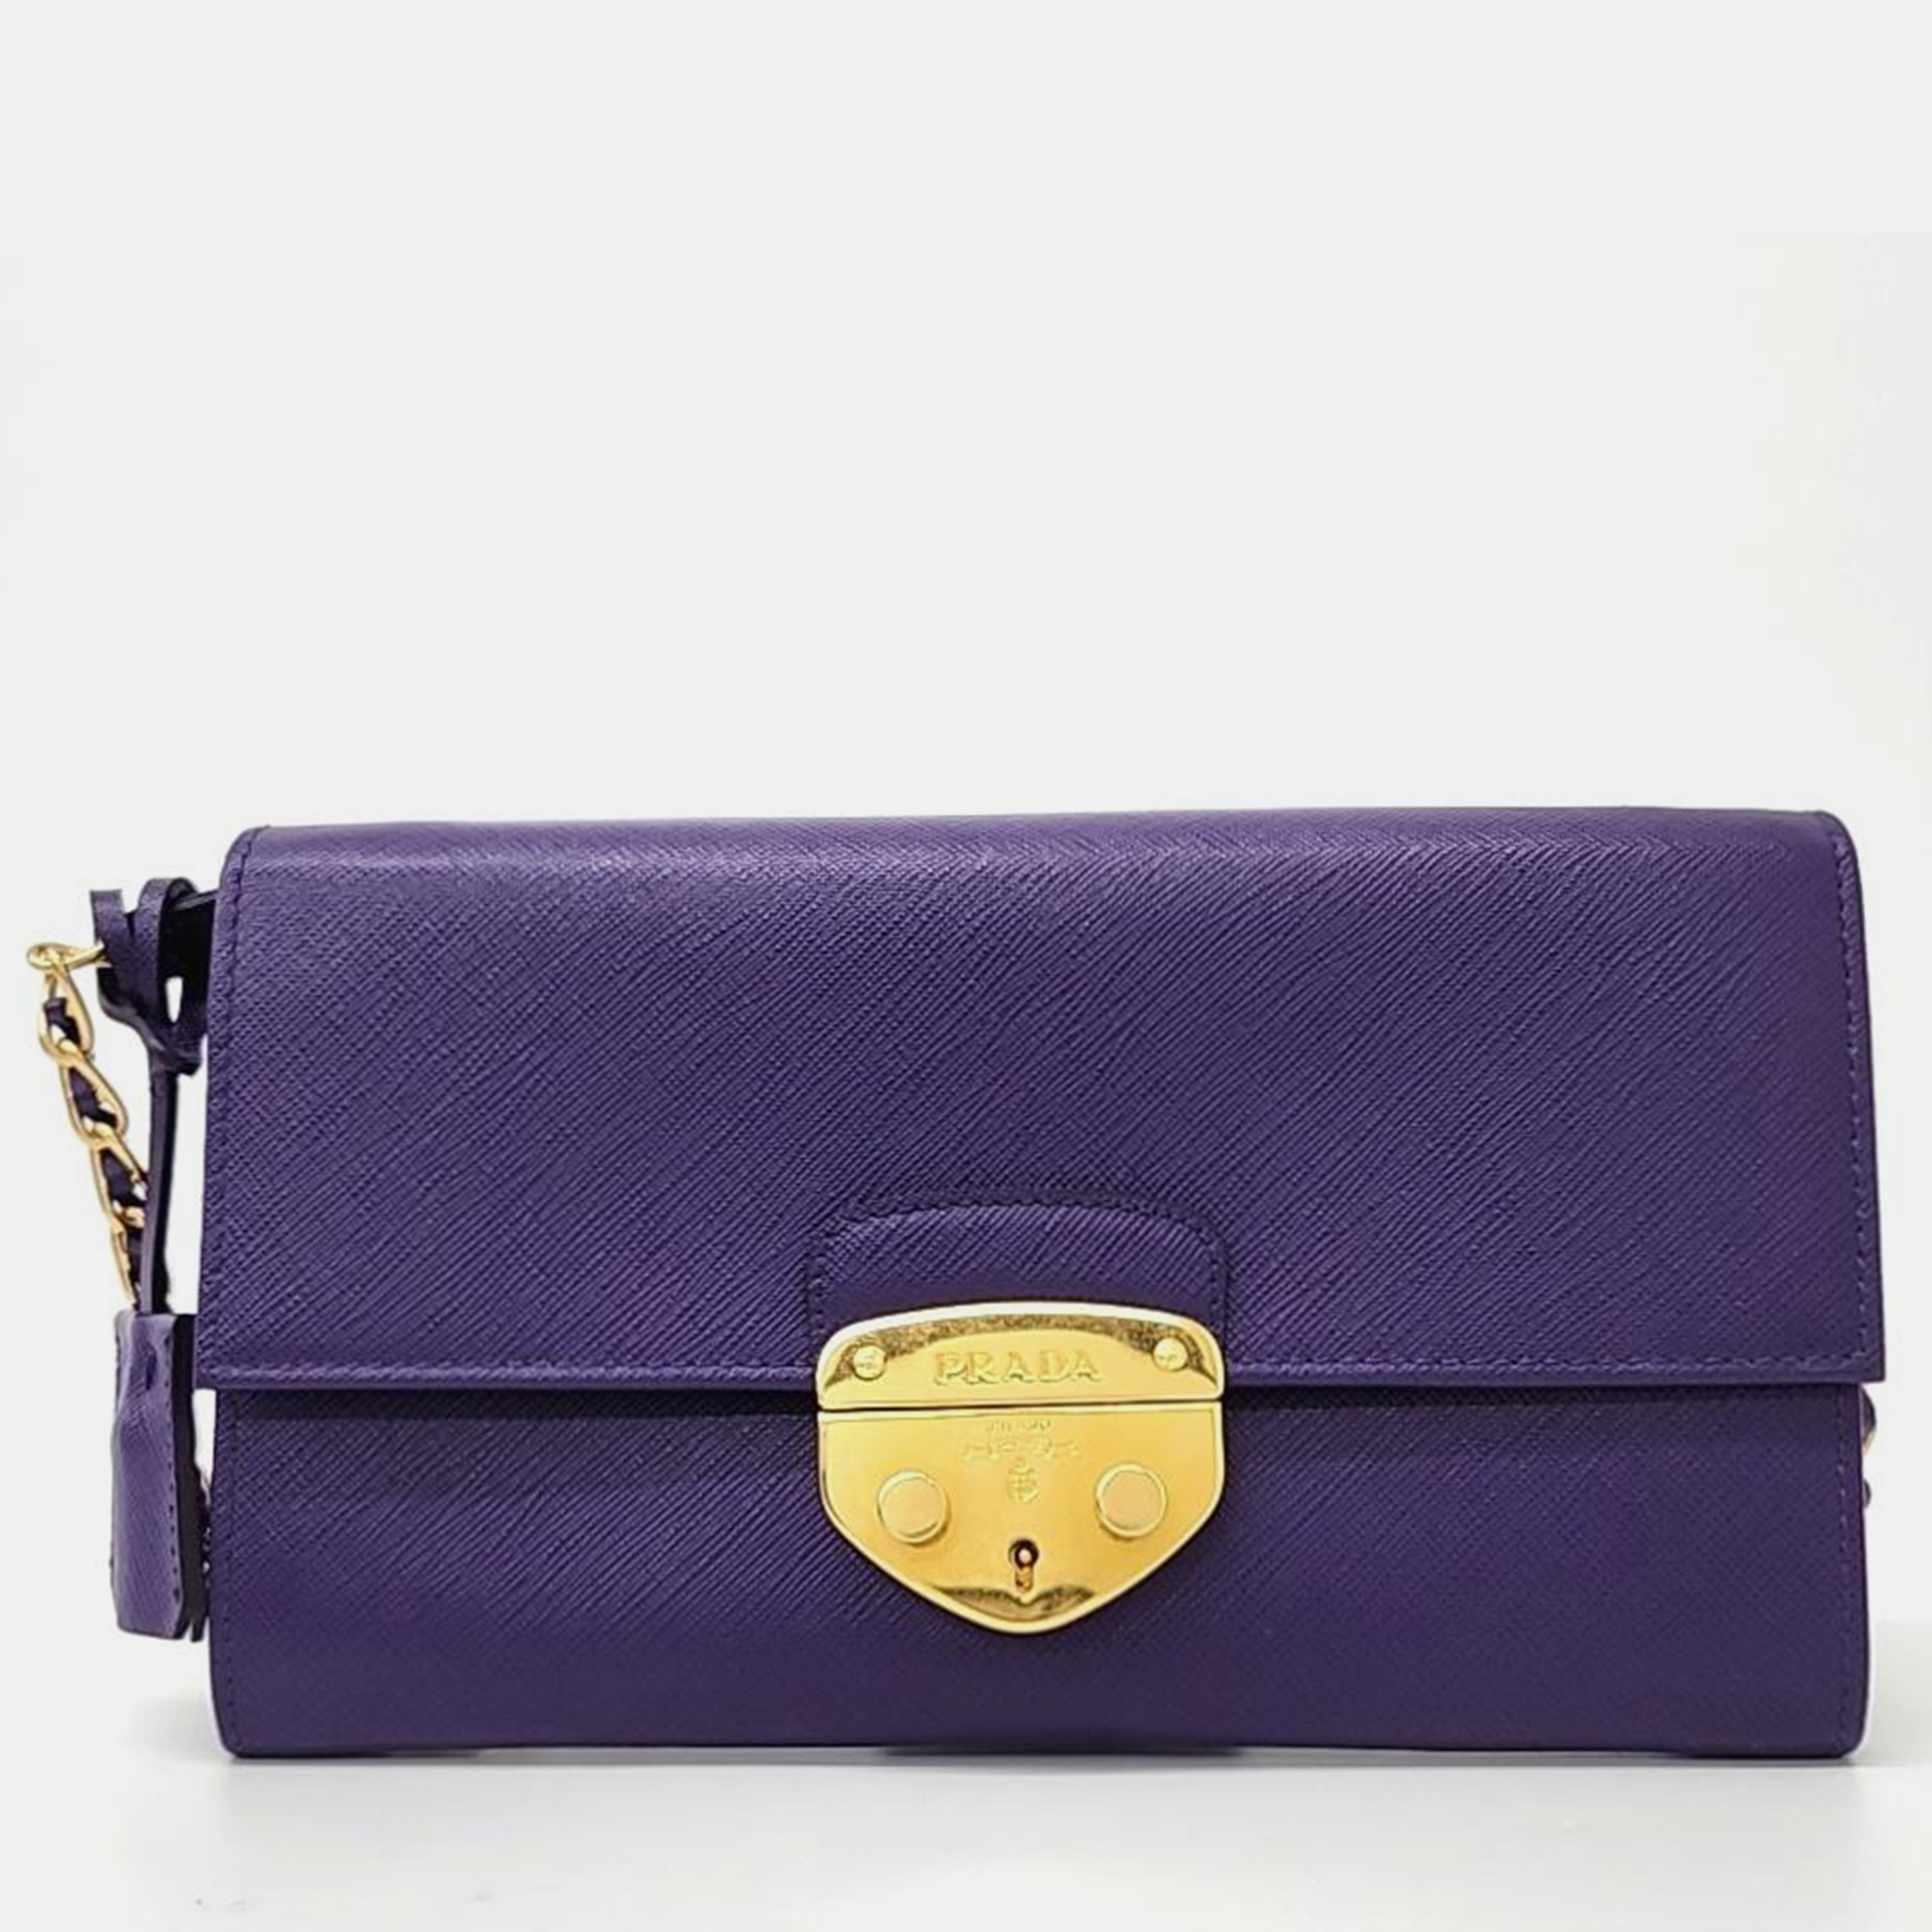 Prada purple saffiano leather mini crossbody bag